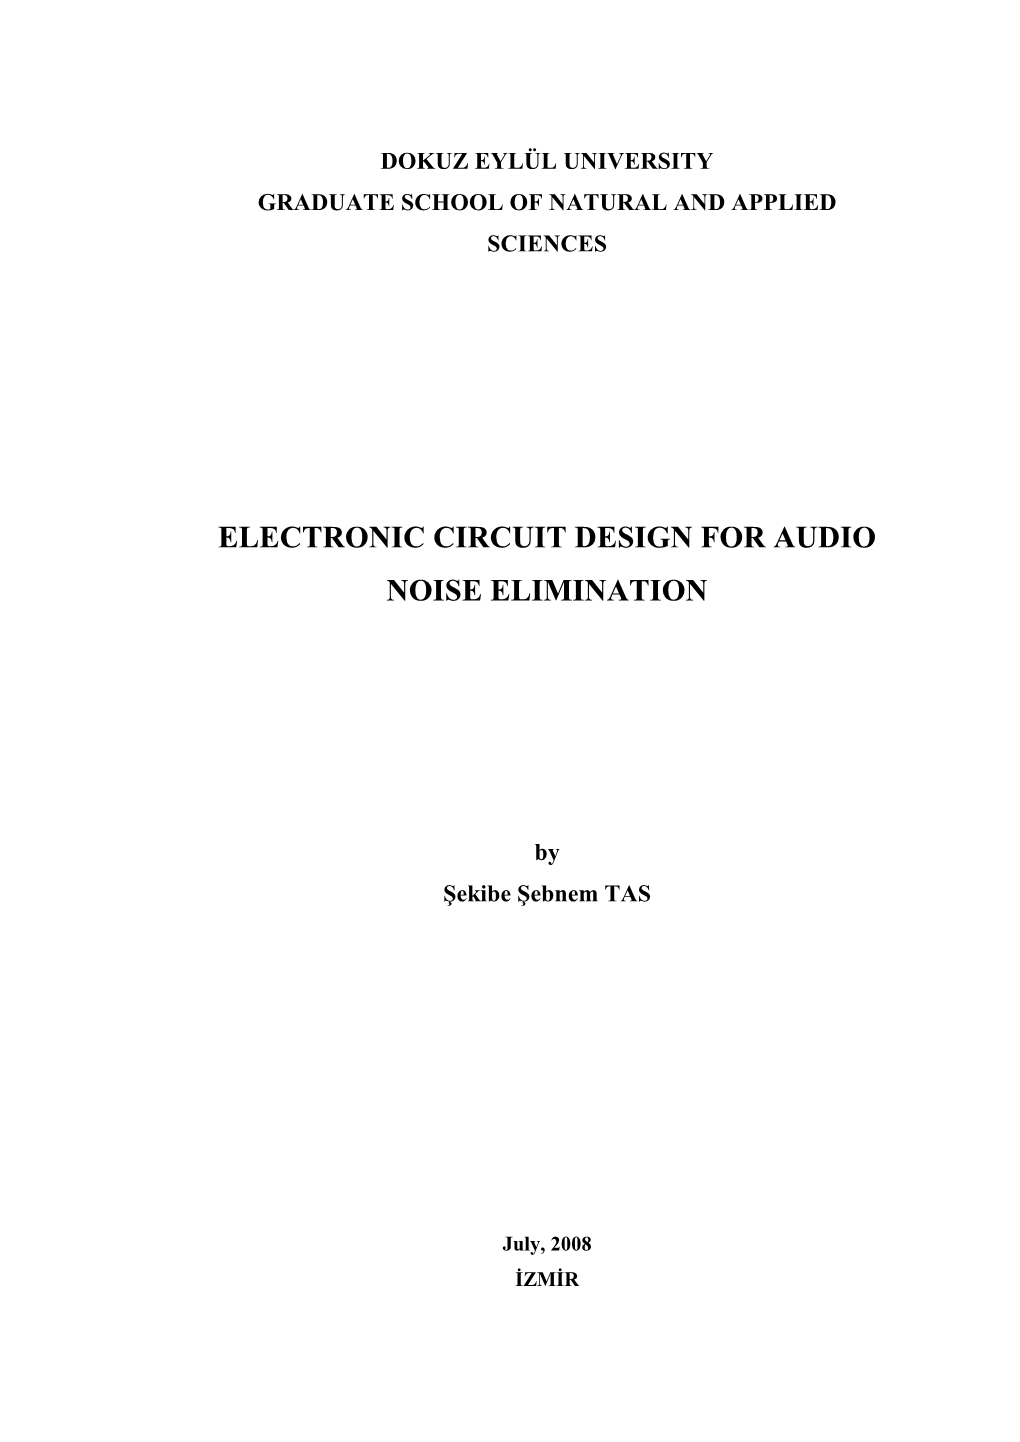 Electronic Circuit Design for Audio Noise Elimination